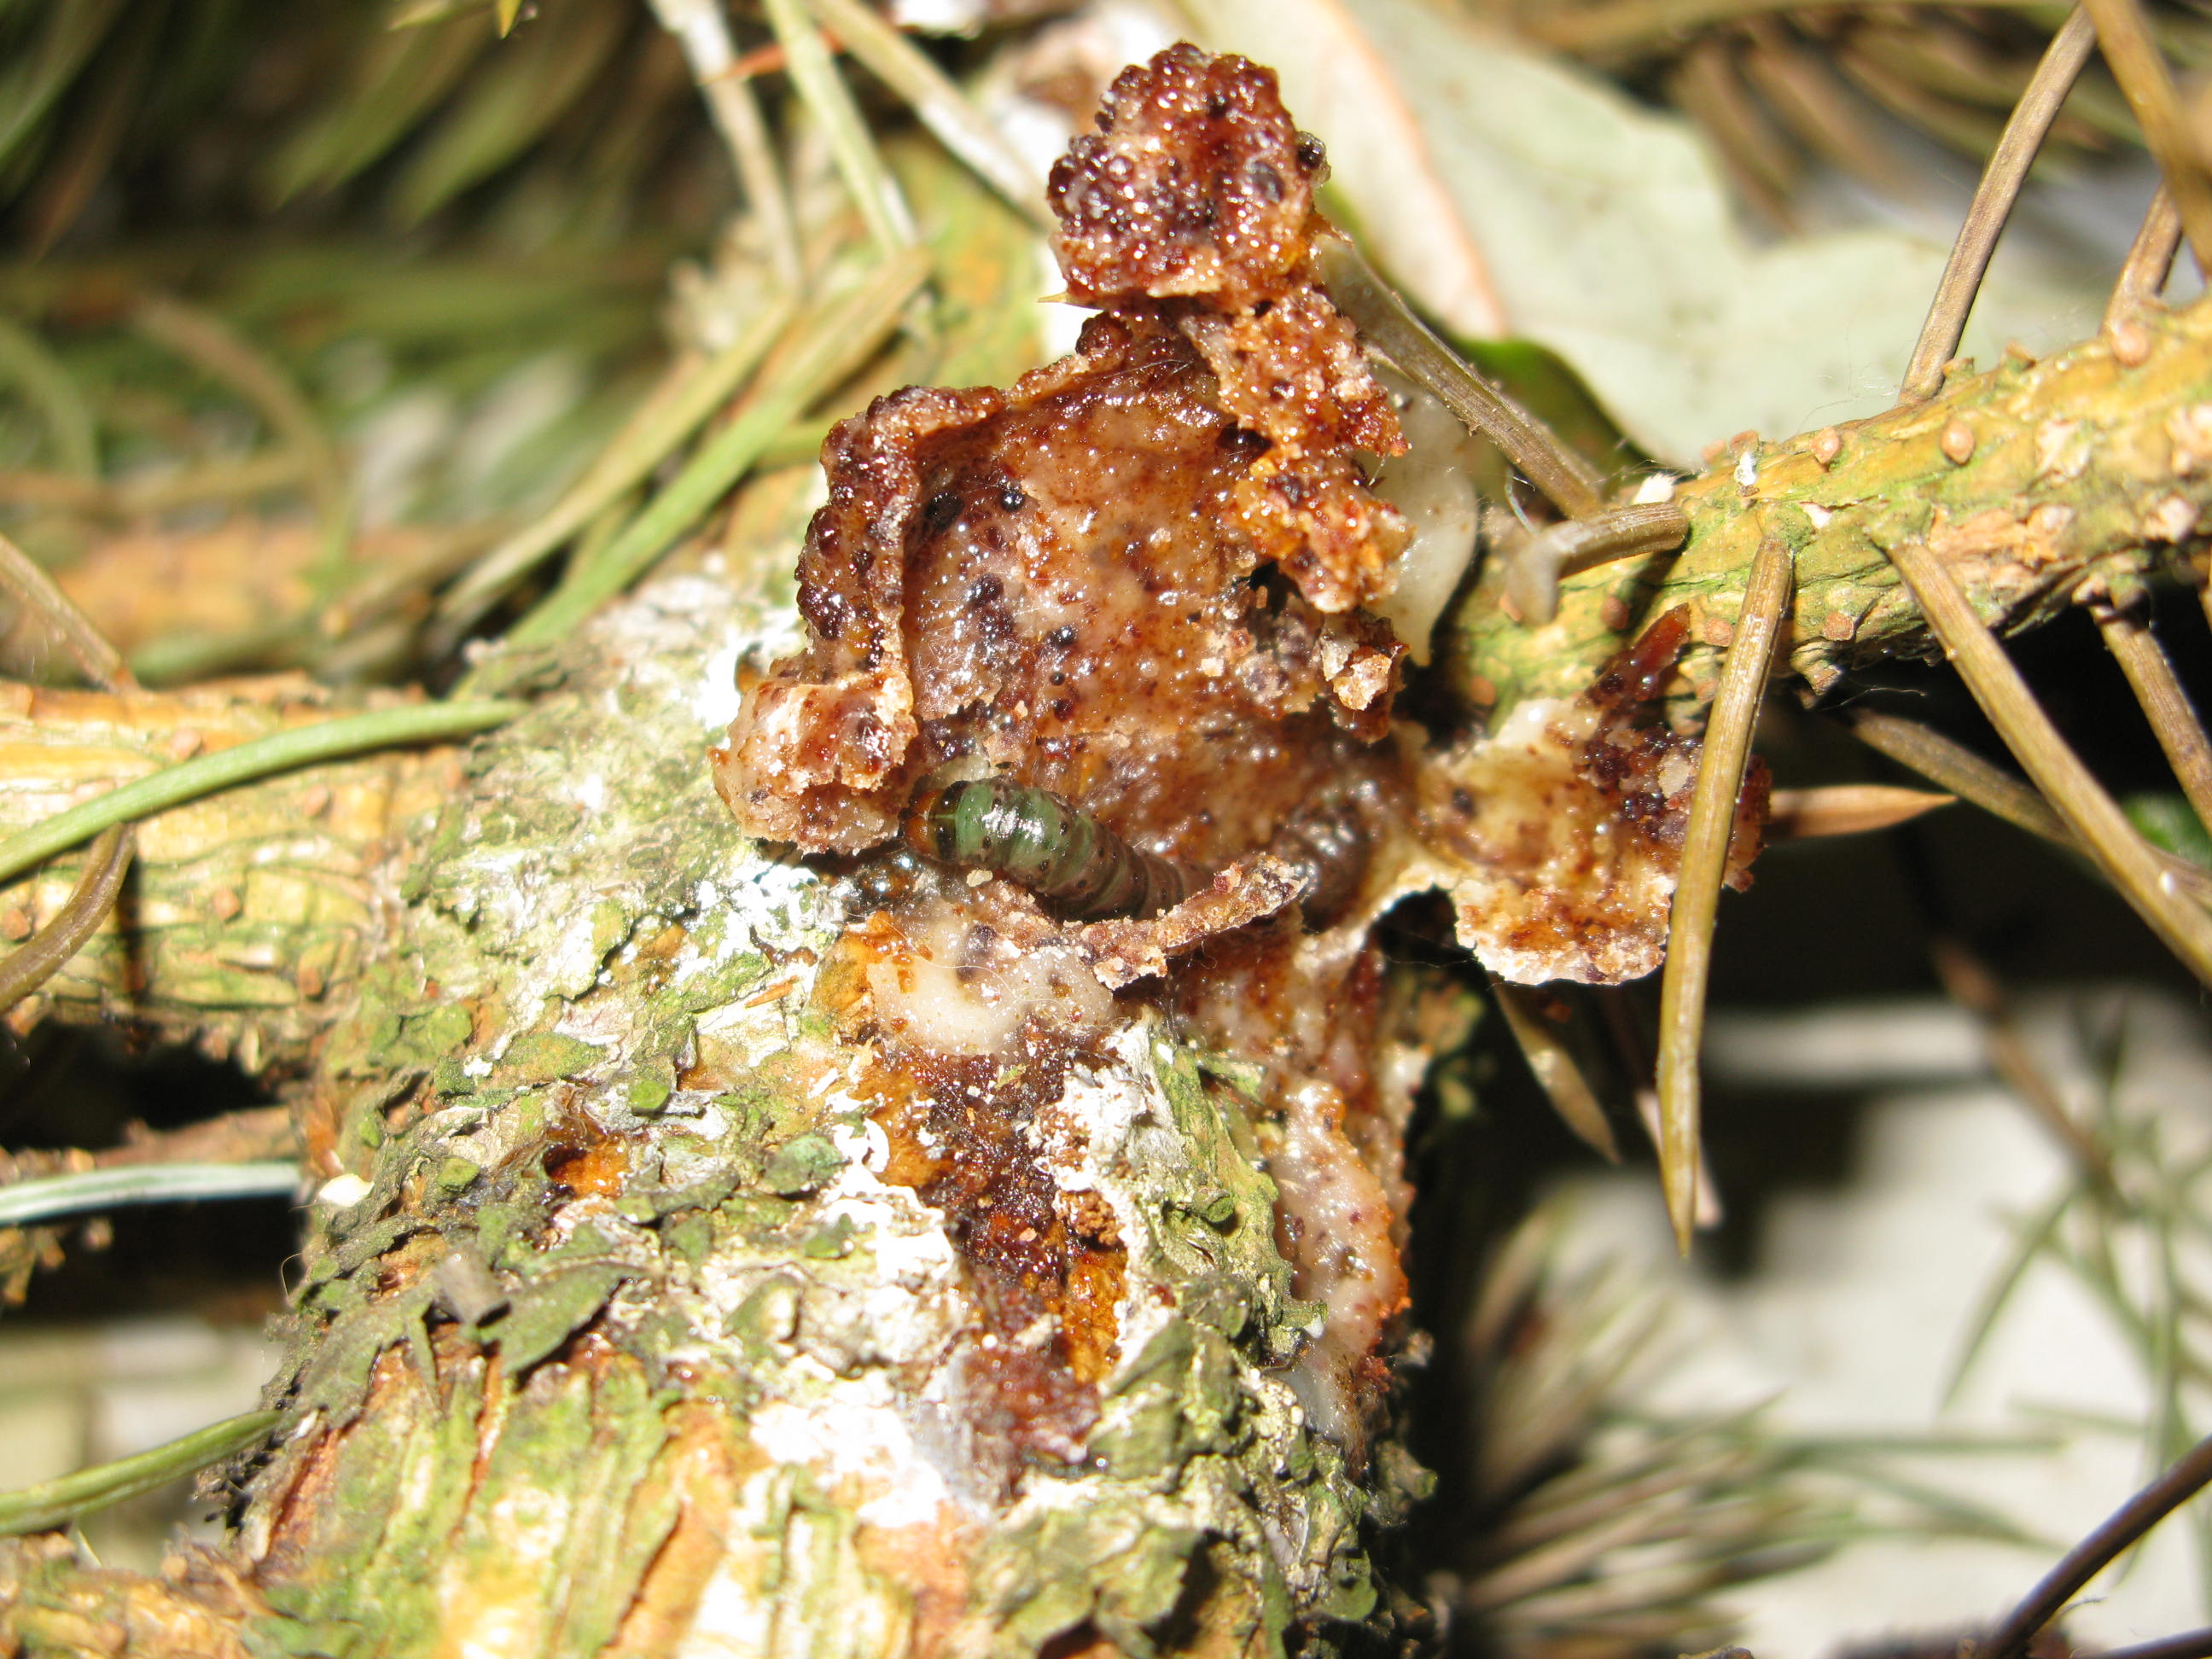 Adult Zimmerman pine moth caterpillar. (<em>Photo Credit: Dave Shetler</em>).